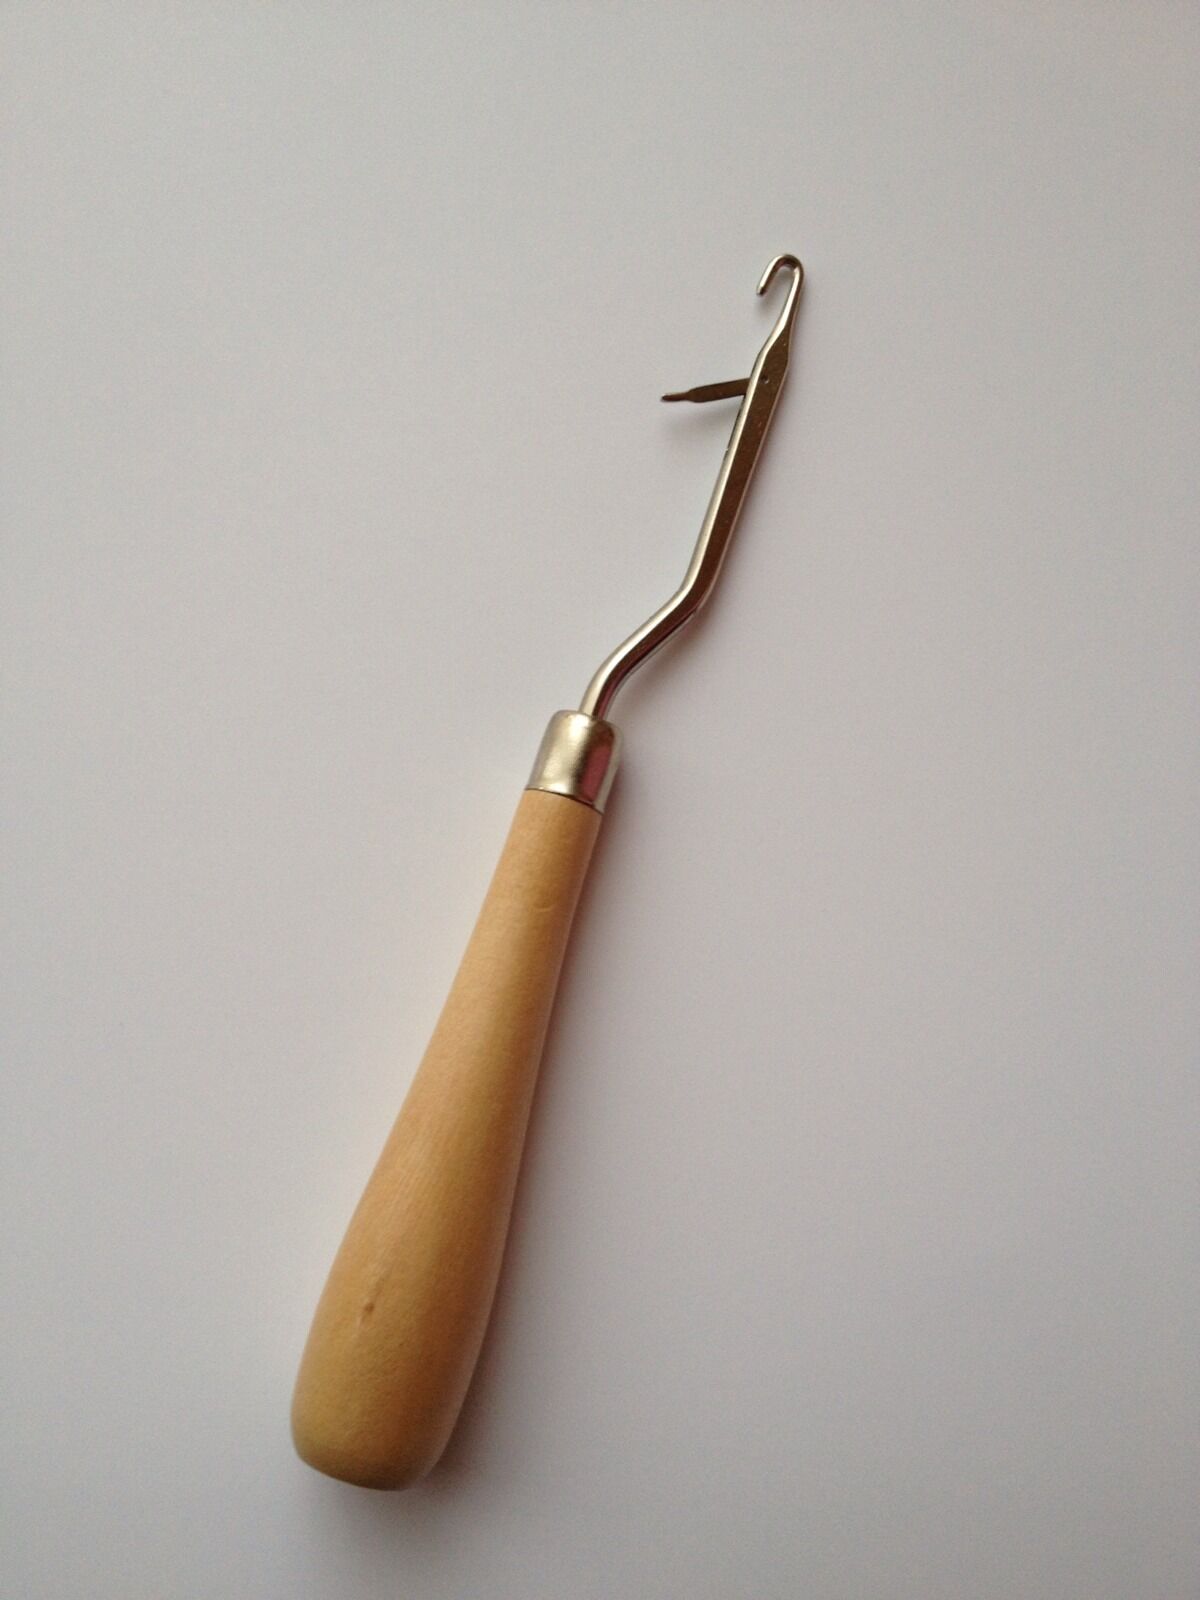 New! Latch Hook Wooden Craft Weaving Rug Making Hooking Tool Bent Hooks Needle